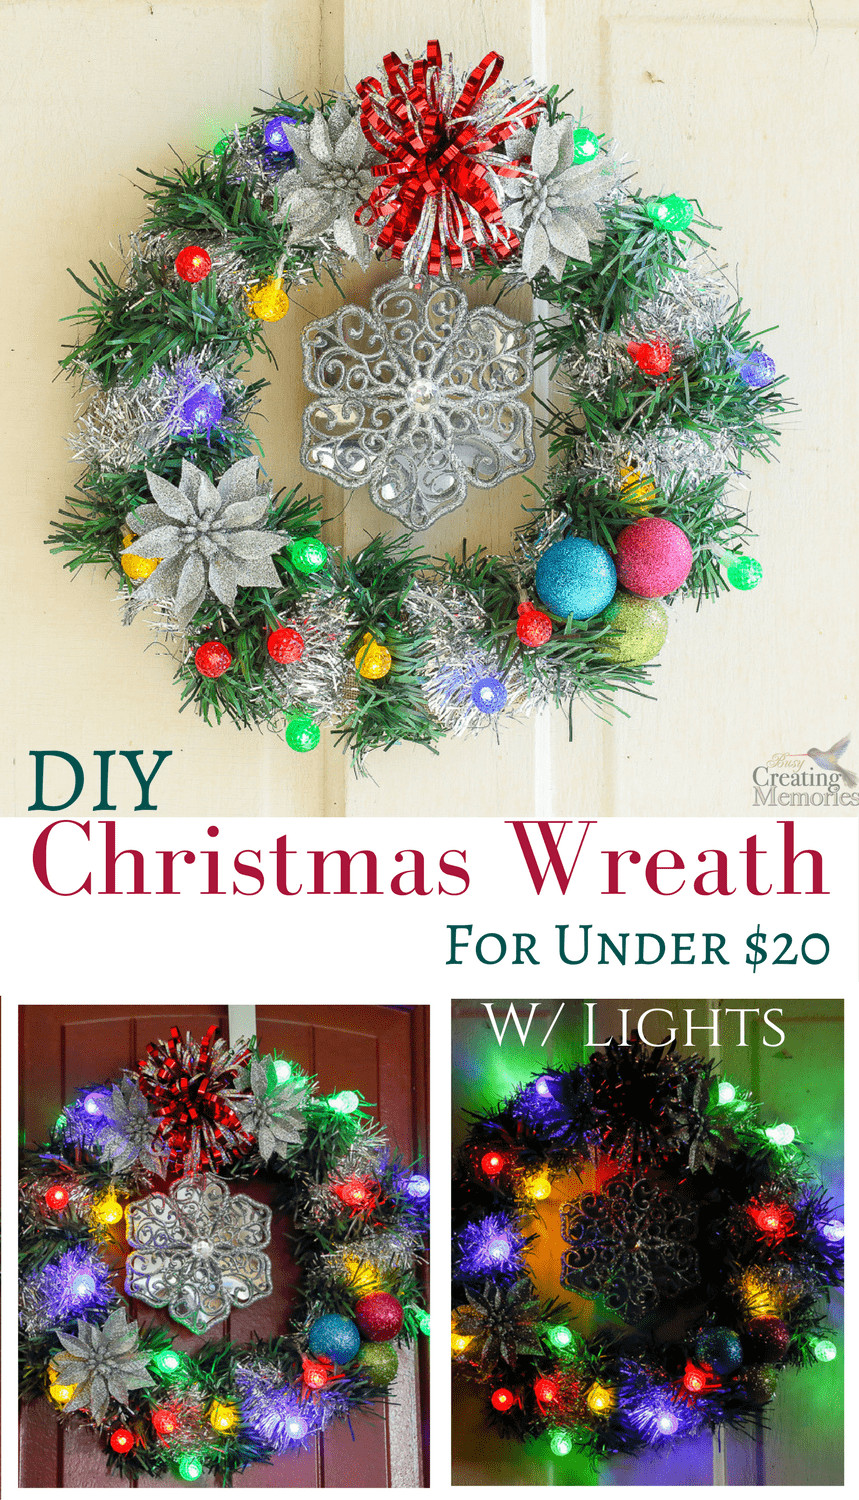 DIY Christmas Wreath Pinterest
 How to make an easy DIY Lighted Christmas Wreath for under $20